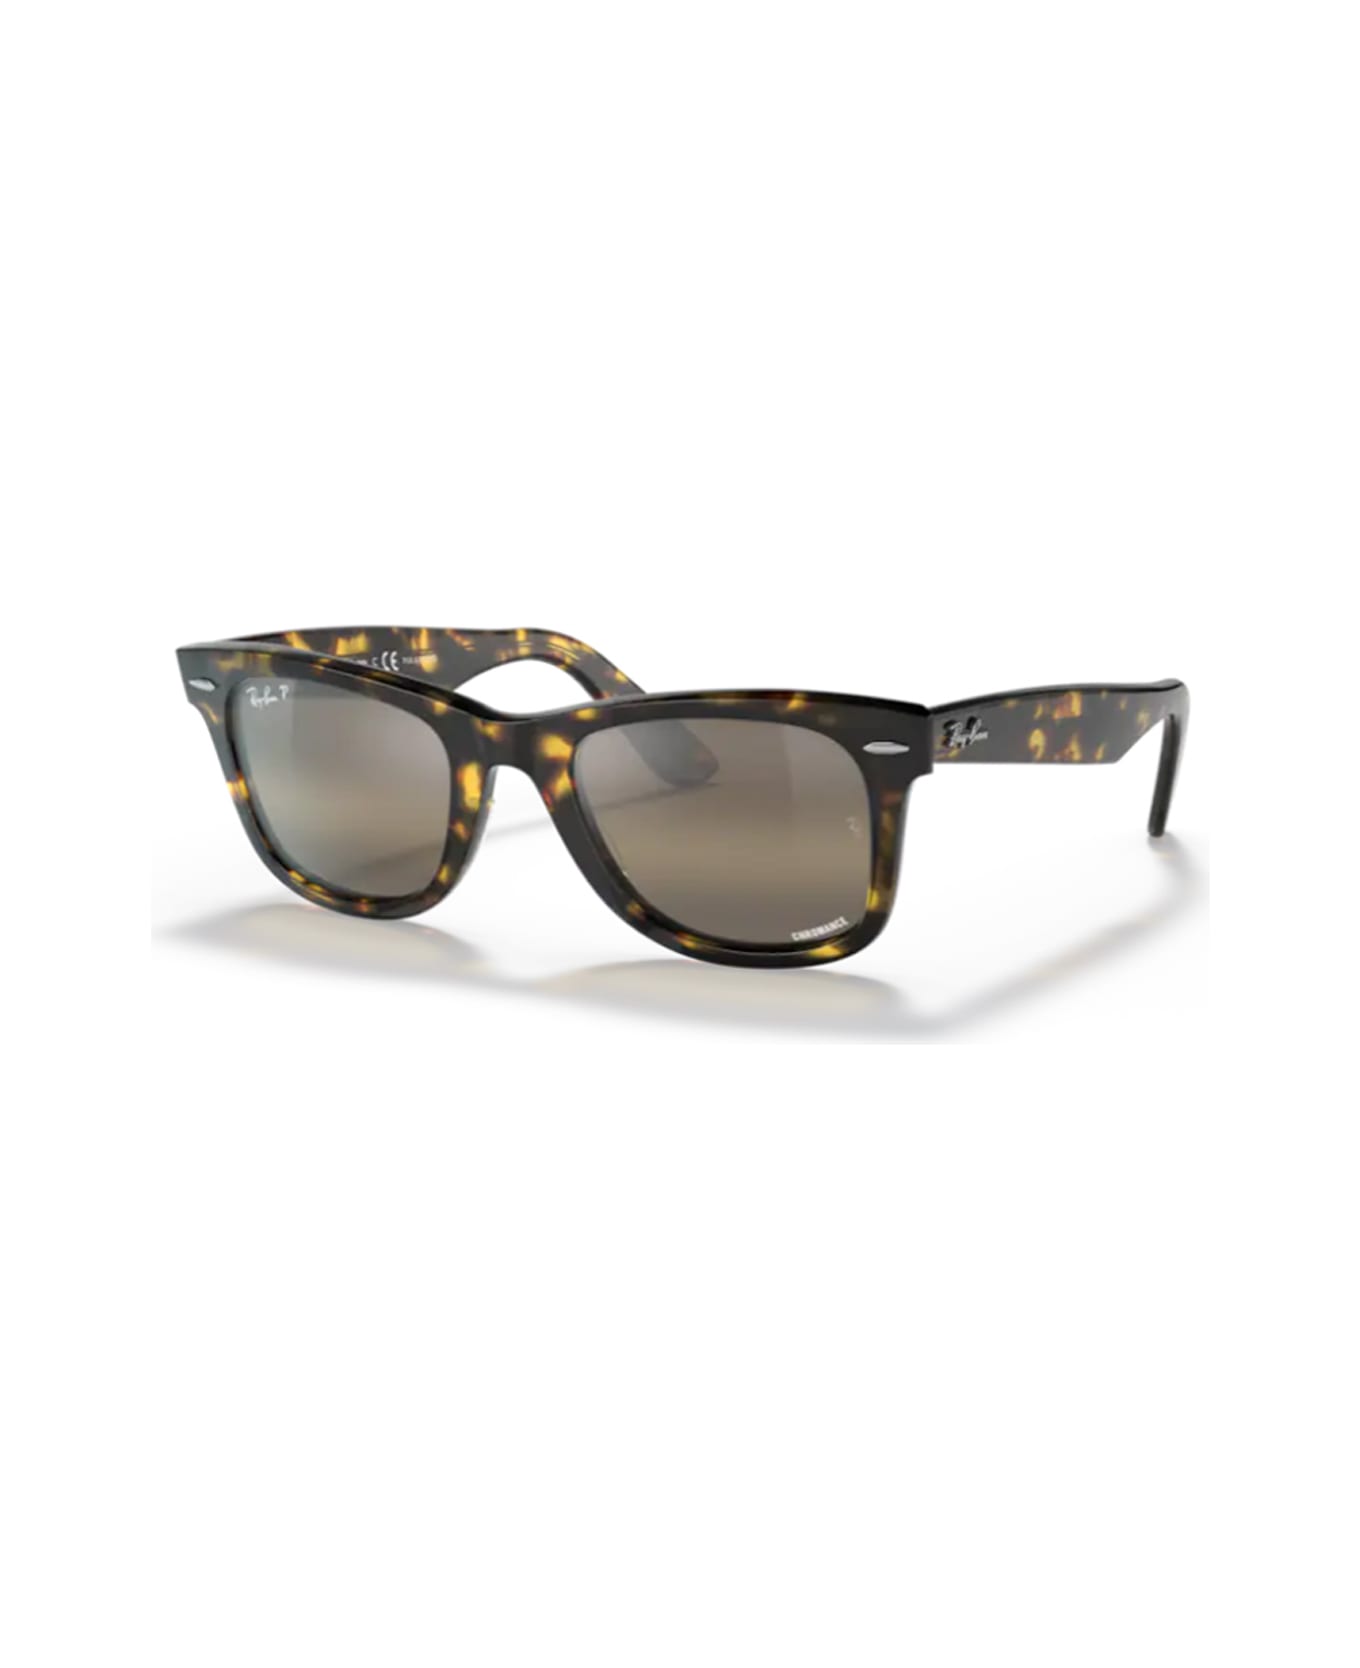 Ray-Ban Rb2140 Wayfarer Sunglasses - Marrone サングラス